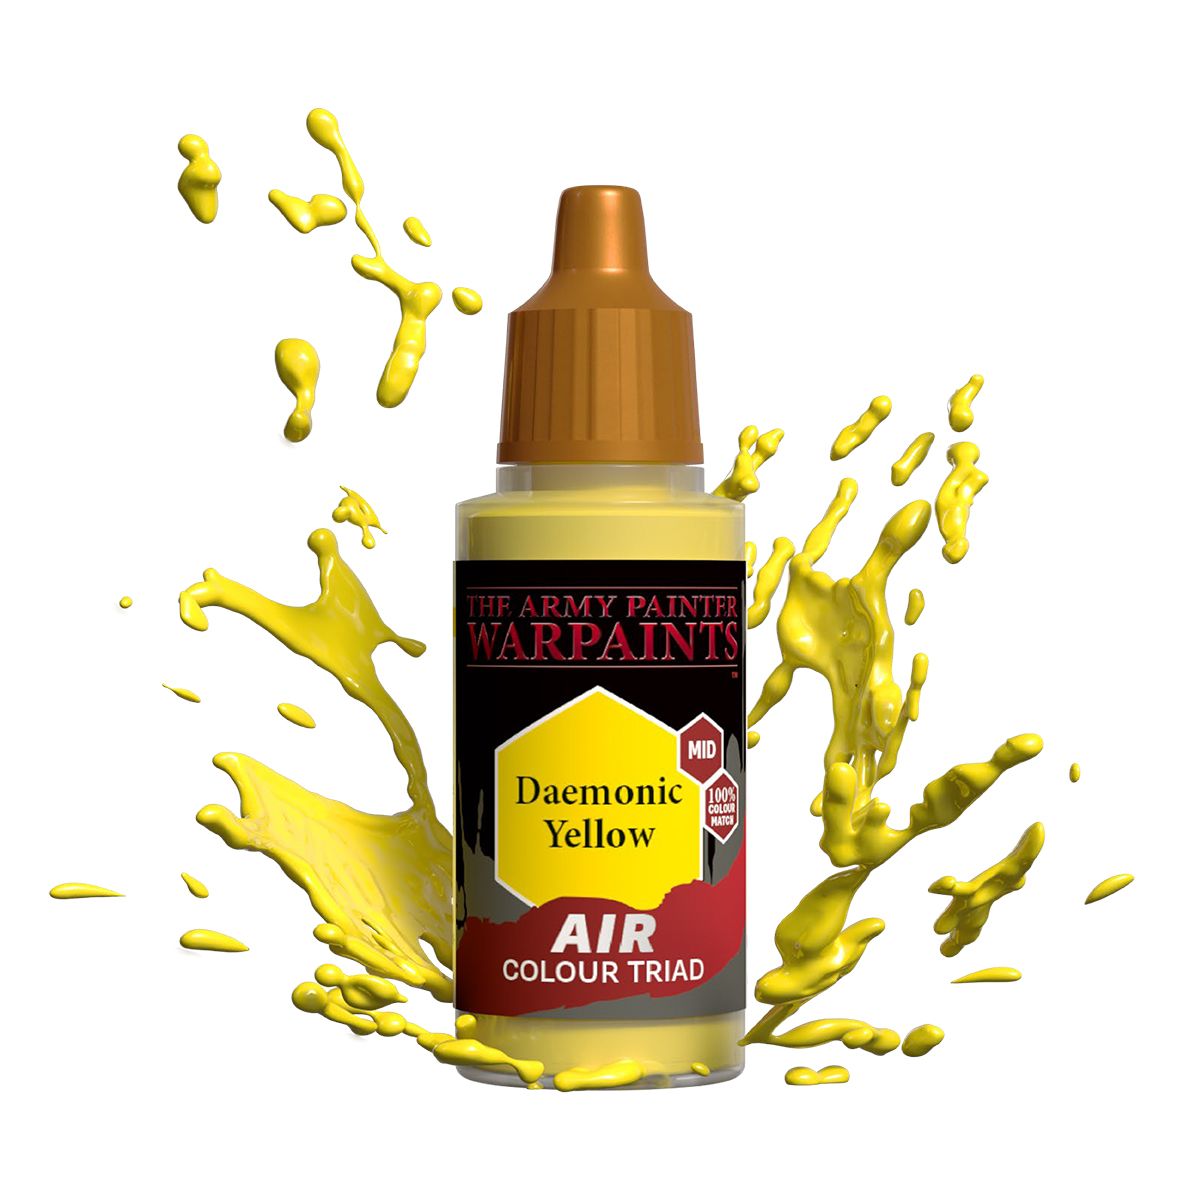 Army Painter Warpaints - Air Daemonic Yellow Acrylic Paint 18ml